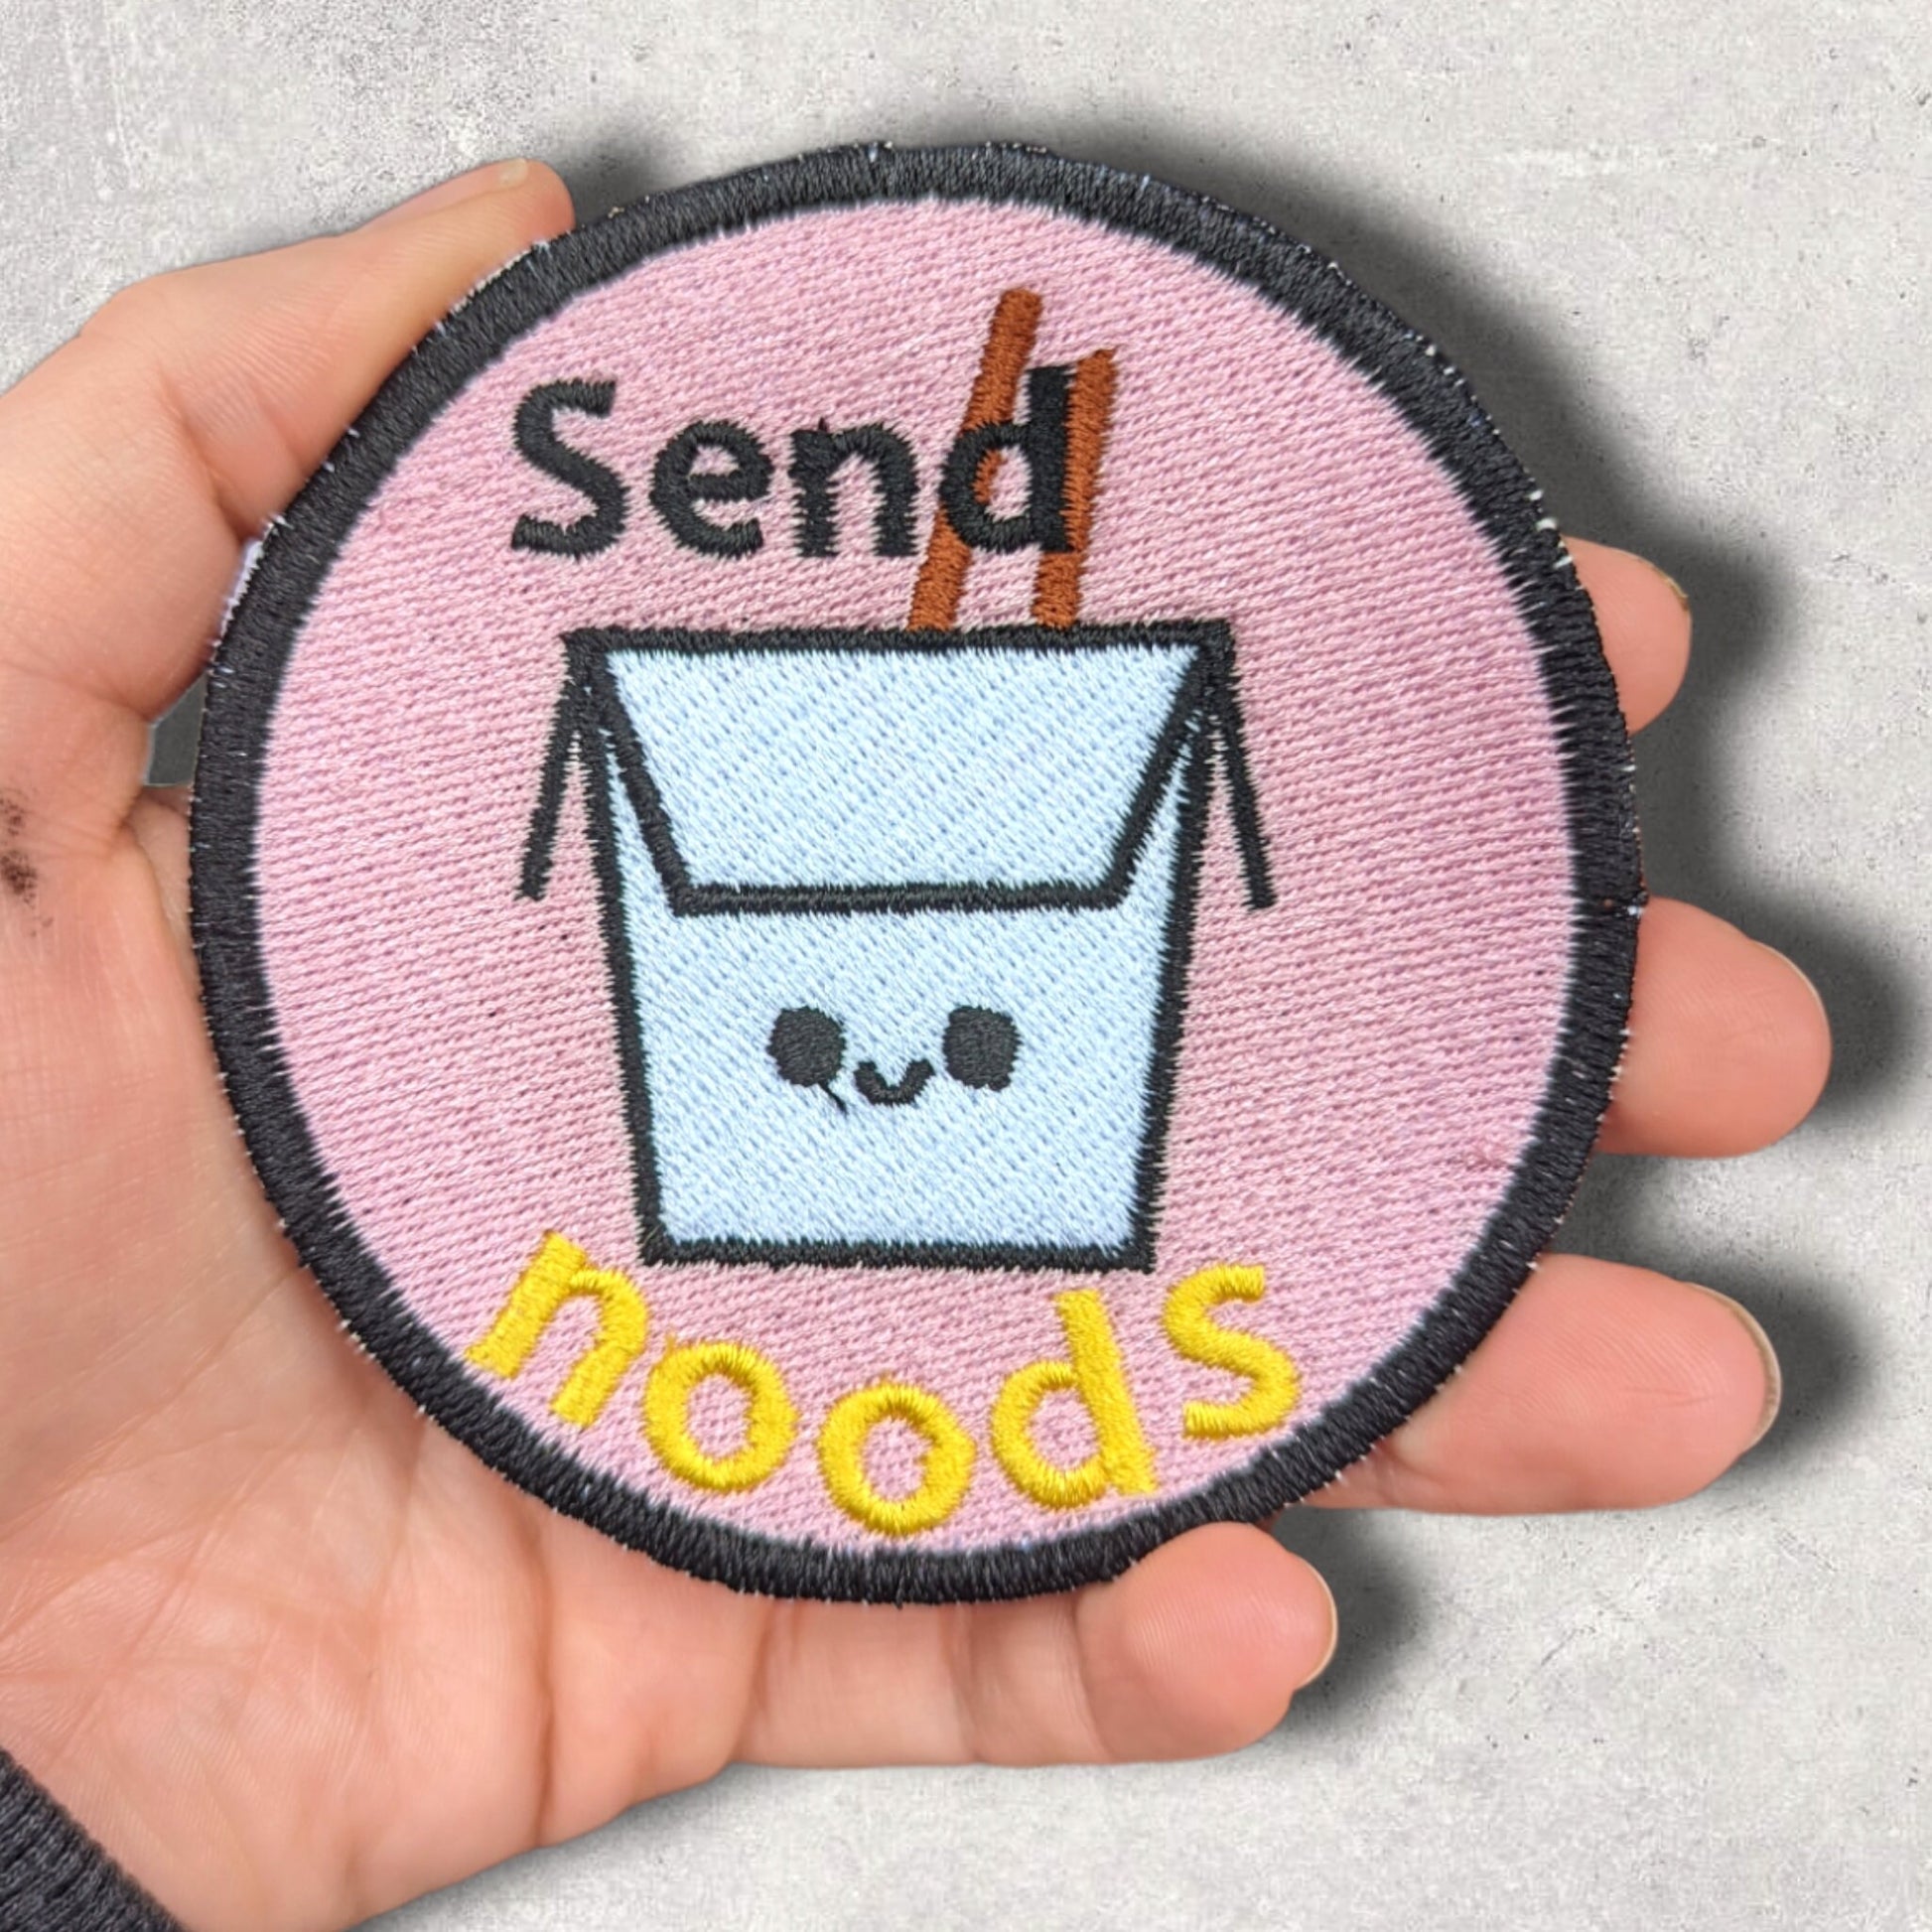 Send noods patch/3"patch/ funny patch